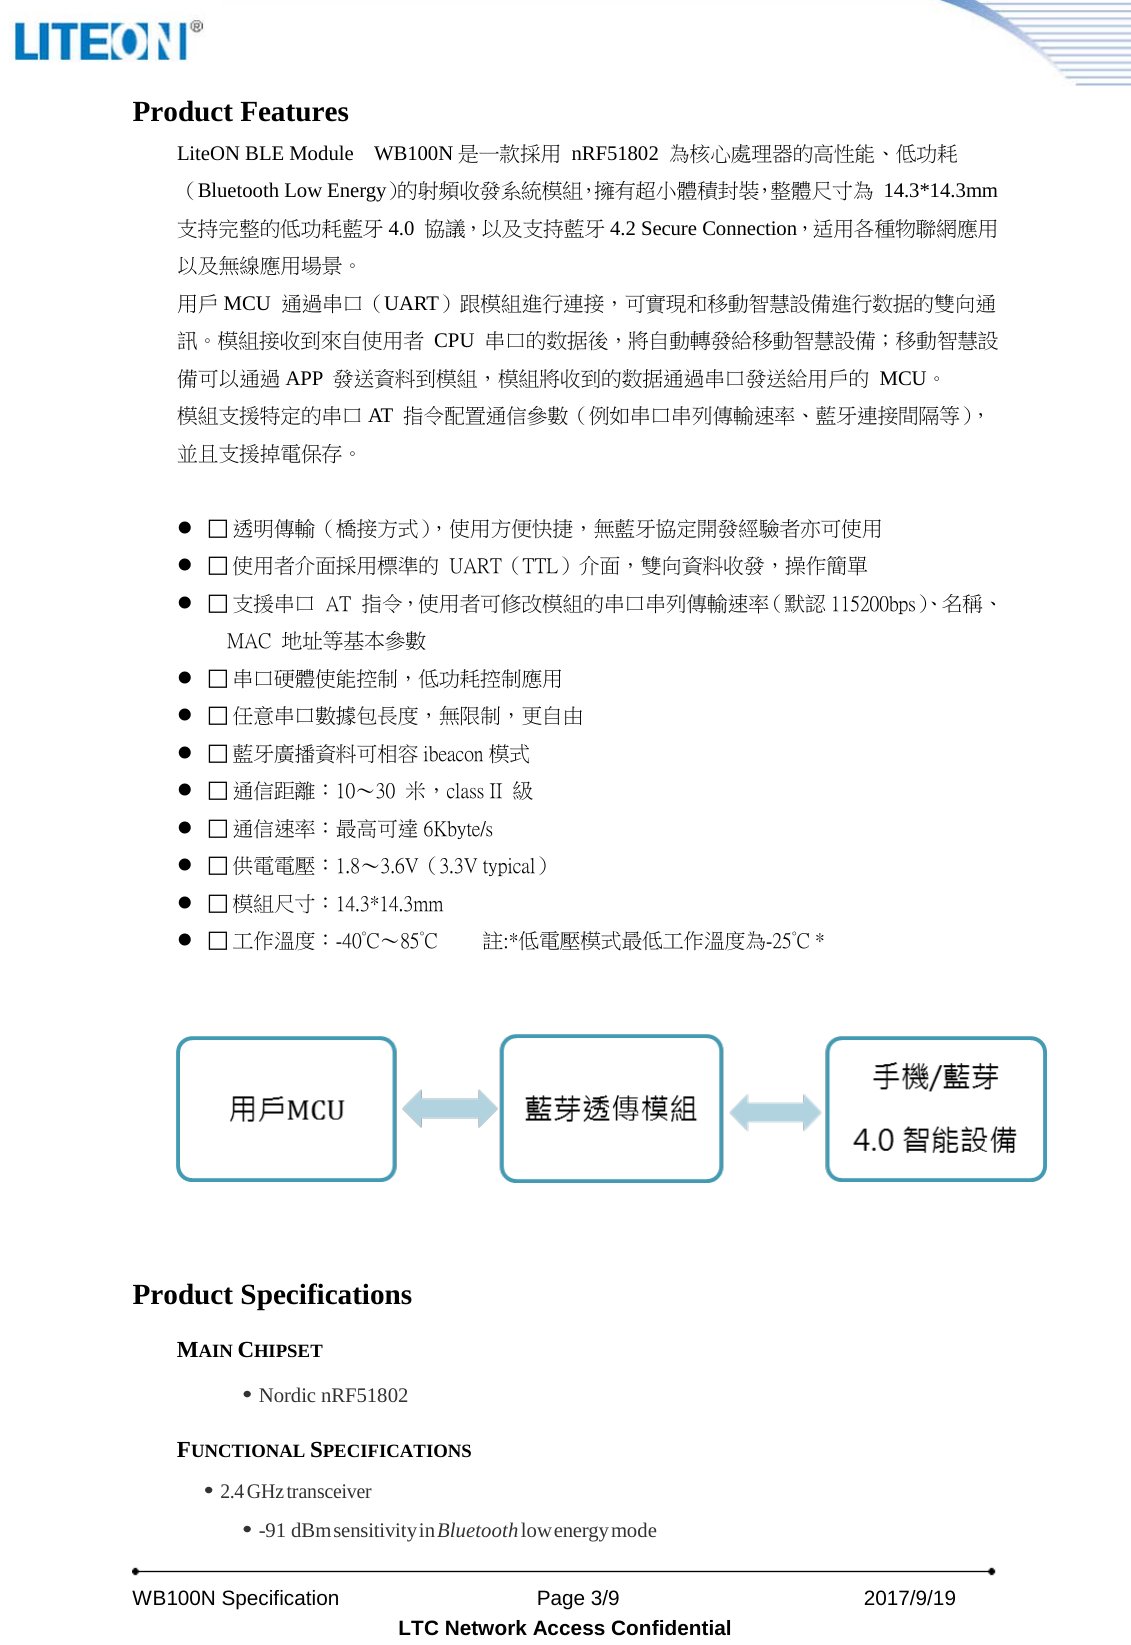   WB100N Specification                    Page 3/9                          2017/9/19   LTC Network Access Confidential Product Features LiteON BLE Module    WB100N 是一款採用 nRF51802  為核心處理器的高性能、低功耗（Bluetooth Low Energy）的射頻收發系統模組，擁有超小體積封裝，整體尺寸為 14.3*14.3mm支持完整的低功耗藍牙 4.0  協議，以及支持藍牙 4.2 Secure Connection，适用各種物聯網應用以及無線應用場景。 用戶 MCU  通過串口（UART）跟模組進行連接，可實現和移動智慧設備進行数据的雙向通訊。模組接收到來自使用者 CPU  串口的数据後，將自動轉發給移動智慧設備；移動智慧設備可以通過 APP  發送資料到模組，模組將收到的数据通過串口發送給用戶的 MCU。 模組支援特定的串口 AT  指令配置通信參數（例如串口串列傳輸速率、藍牙連接間隔等），並且支援掉電保存。     透明傳輸（橋接方式），使用方便快捷，無藍牙協定開發經驗者亦可使用   使用者介面採用標準的 UART（TTL）介面，雙向資料收發，操作簡單   支援串口 AT  指 令，使用者可修改模組的串口串列傳輸速率（默認 115200bps）、 名 稱 、MAC  地址等基本參數   串口硬體使能控制，低功耗控制應用   任意串口數據包長度，無限制，更自由   藍牙廣播資料可相容 ibeacon 模式   通信距離：10～30  米，class II  級   通信速率：最高可達 6Kbyte/s   供電電壓：1.8～3.6V（3.3V typical）   模組尺寸：14.3*14.3mm   工作溫度：-40°C～85°C   註:*低電壓模式最低工作溫度為-25°C *  Product Specifications MAIN CHIPSET • Nordic nRF51802 FUNCTIONAL SPECIFICATIONS • 2.4 GHz transceiver • -91 dBm sensitivity in Bluetooth low energy mode 